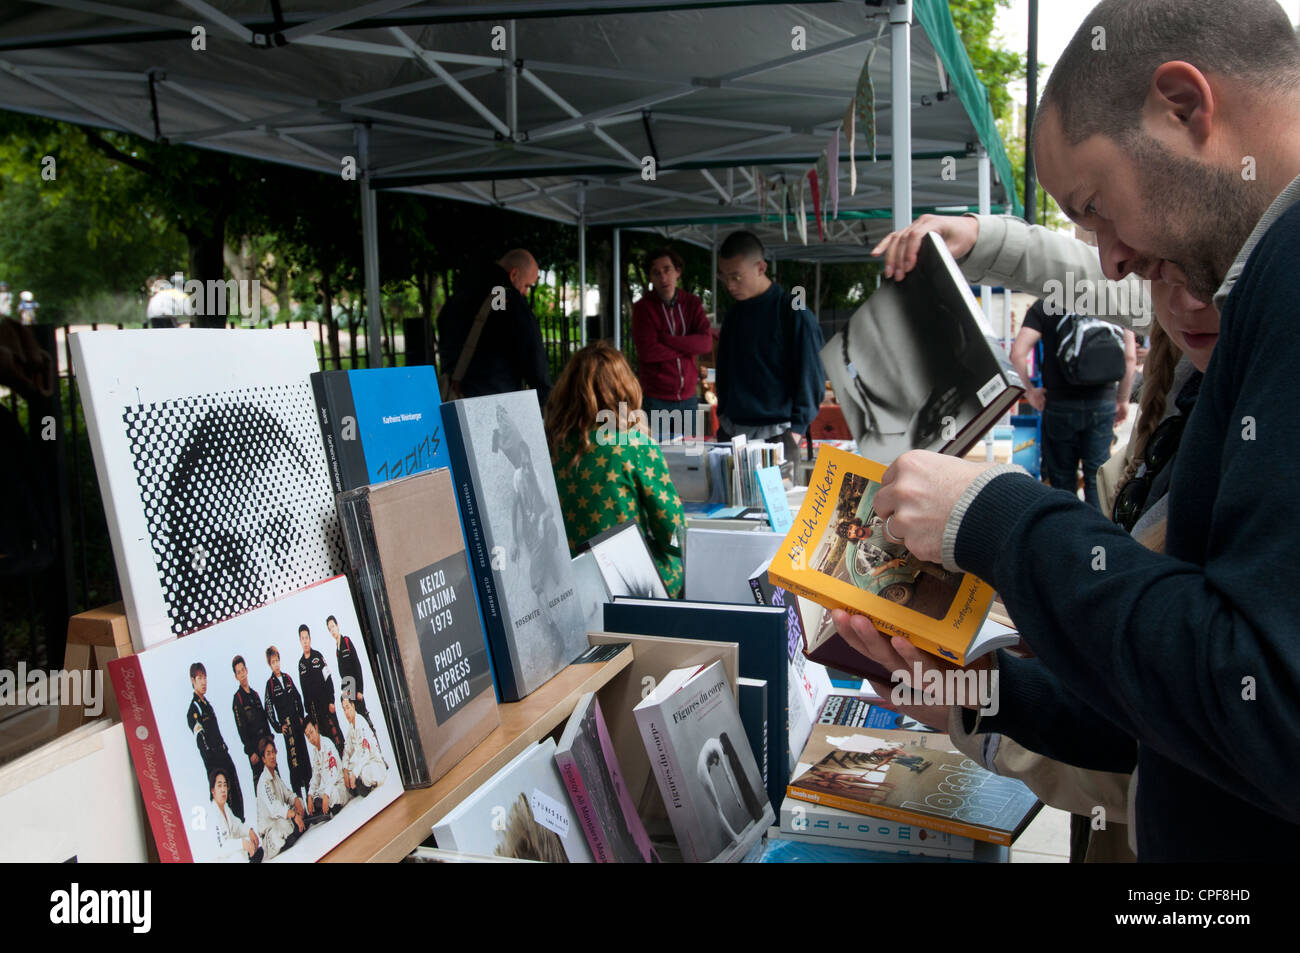 Goldsmith Row Hackney. Sunday morning book market. Customers browse through art books Stock Photo